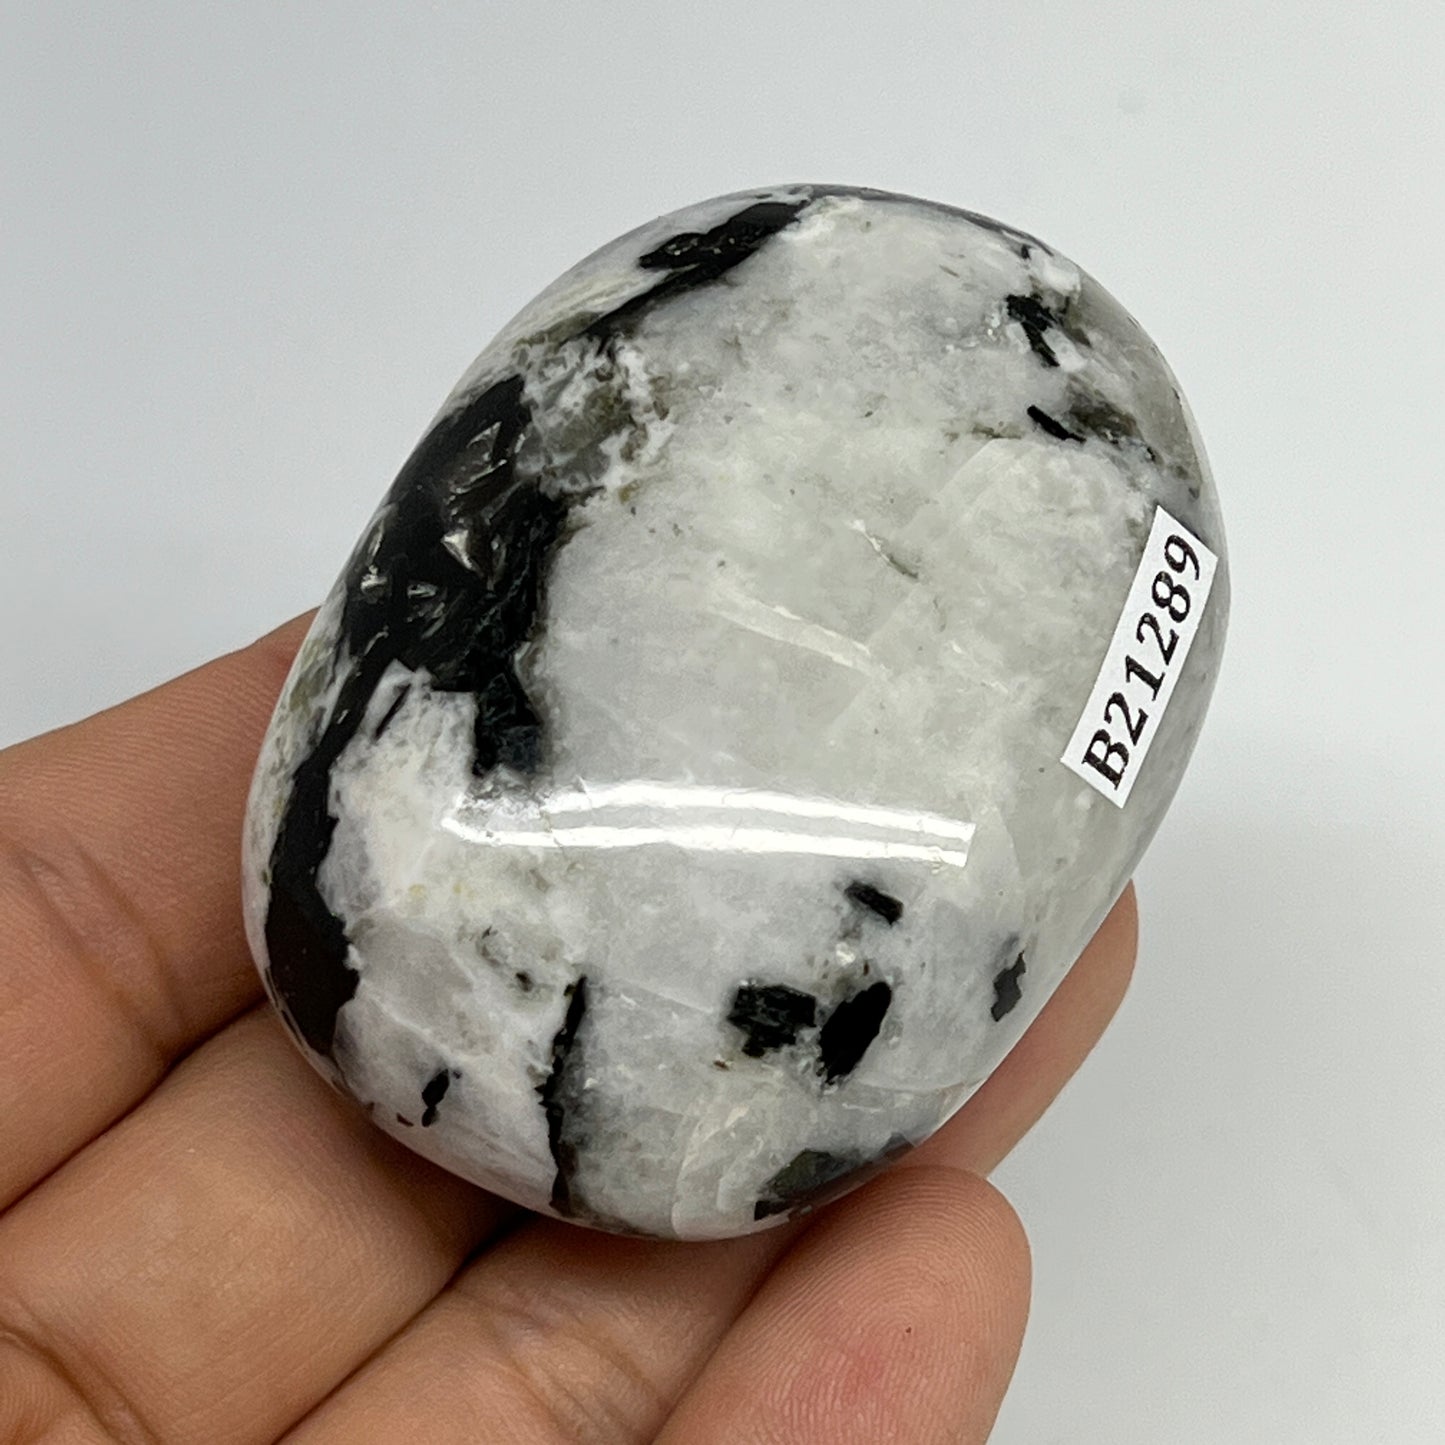 108g,2.3"x1.7"x1.1", Rainbow Moonstone Palm-Stone Polished from India, B21289